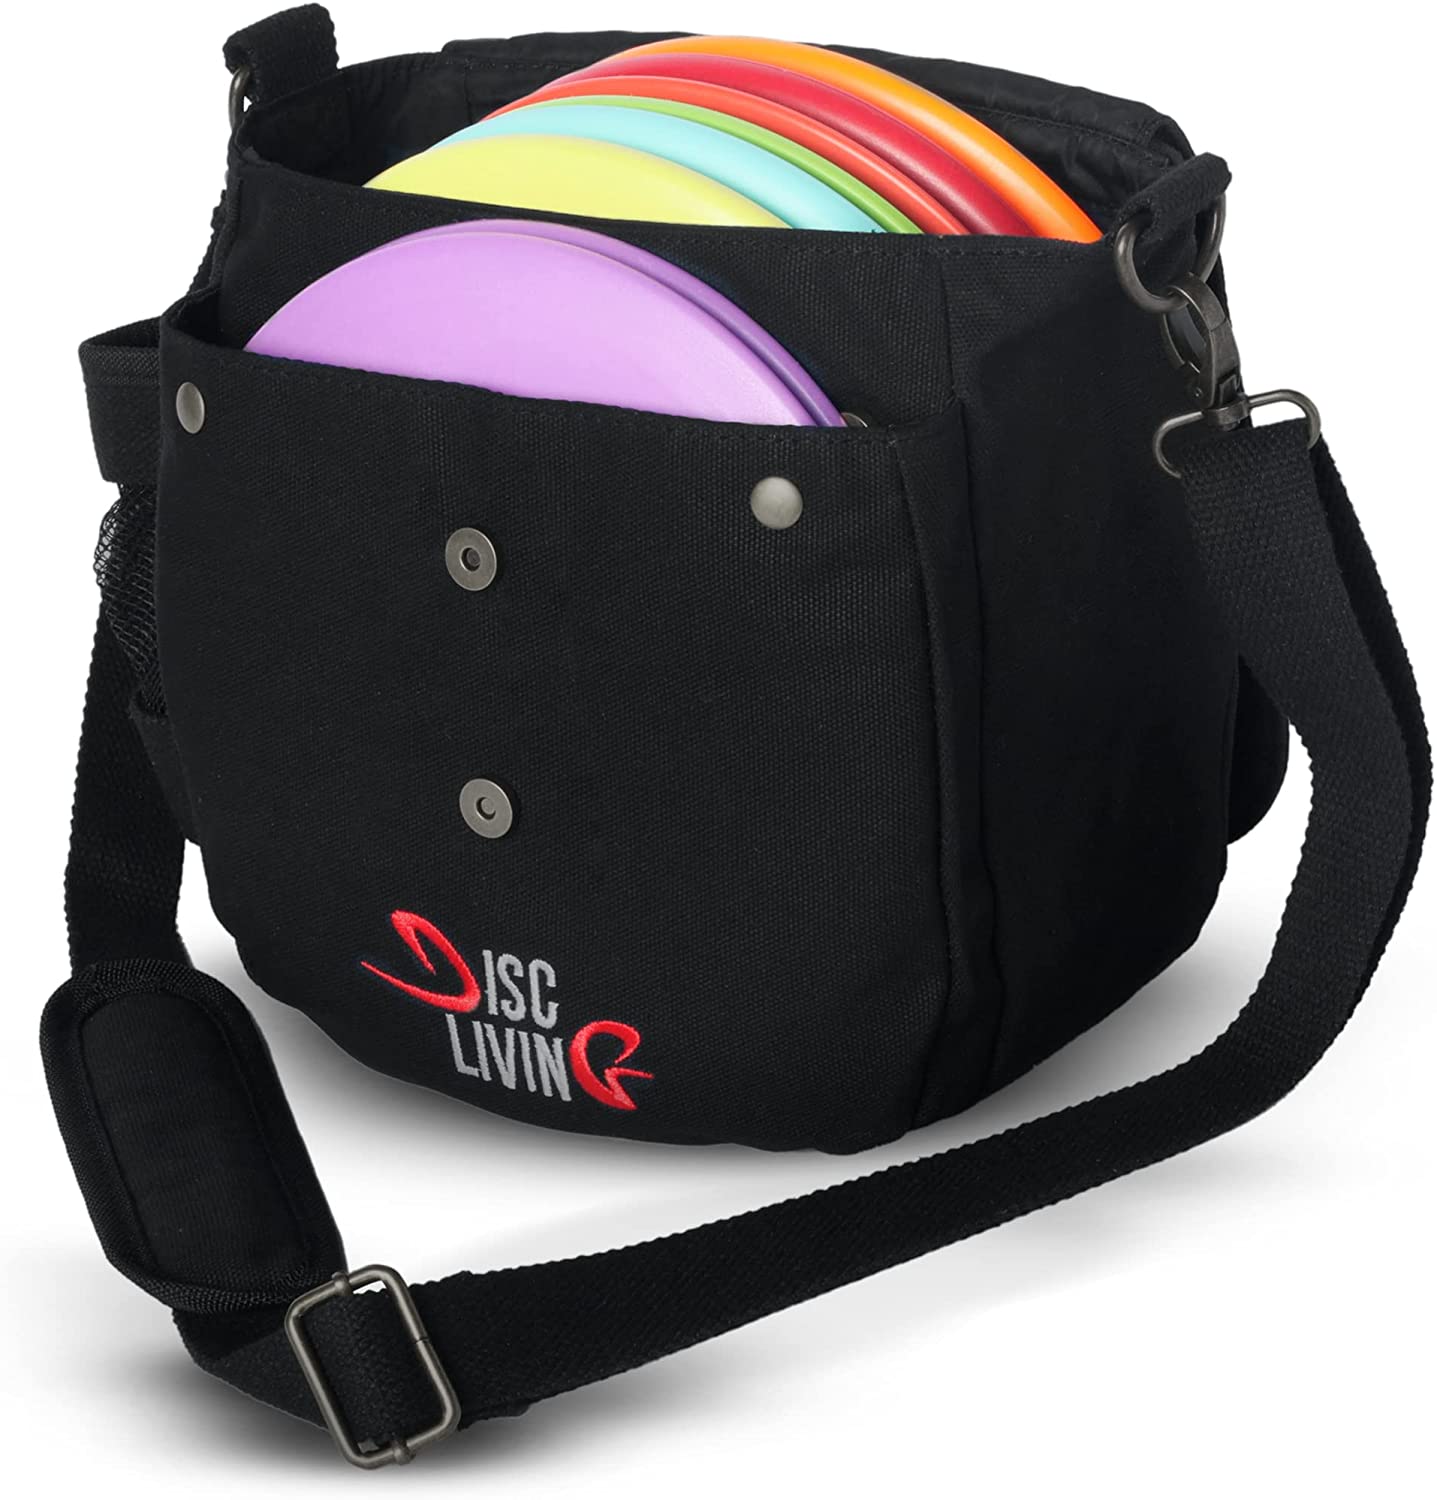 Disc Living Disc Carrier | Frisbee Golf Bag